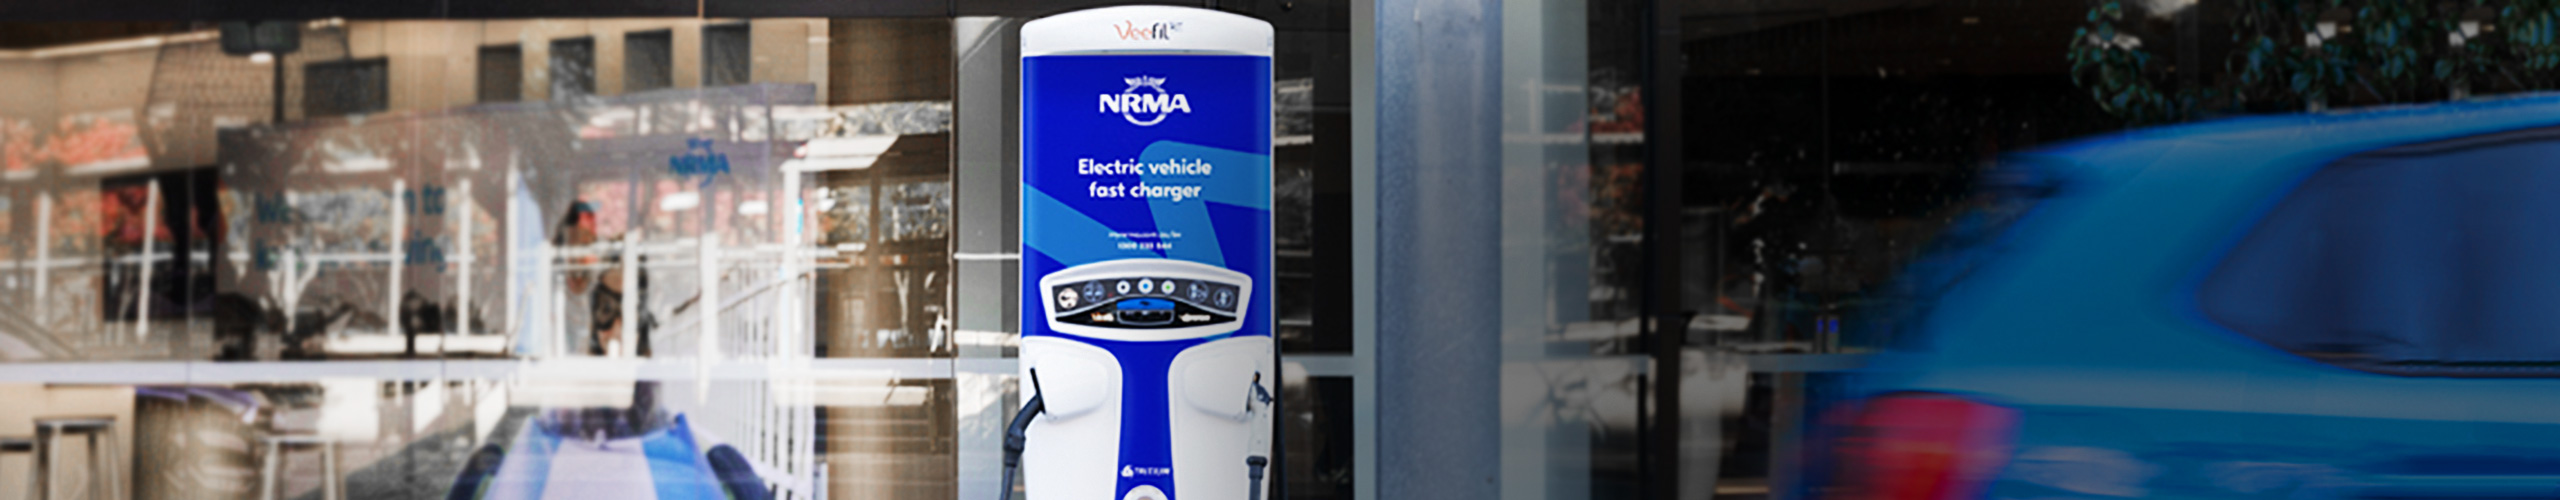 NRMA Electric Vehicle Fast Charging Network